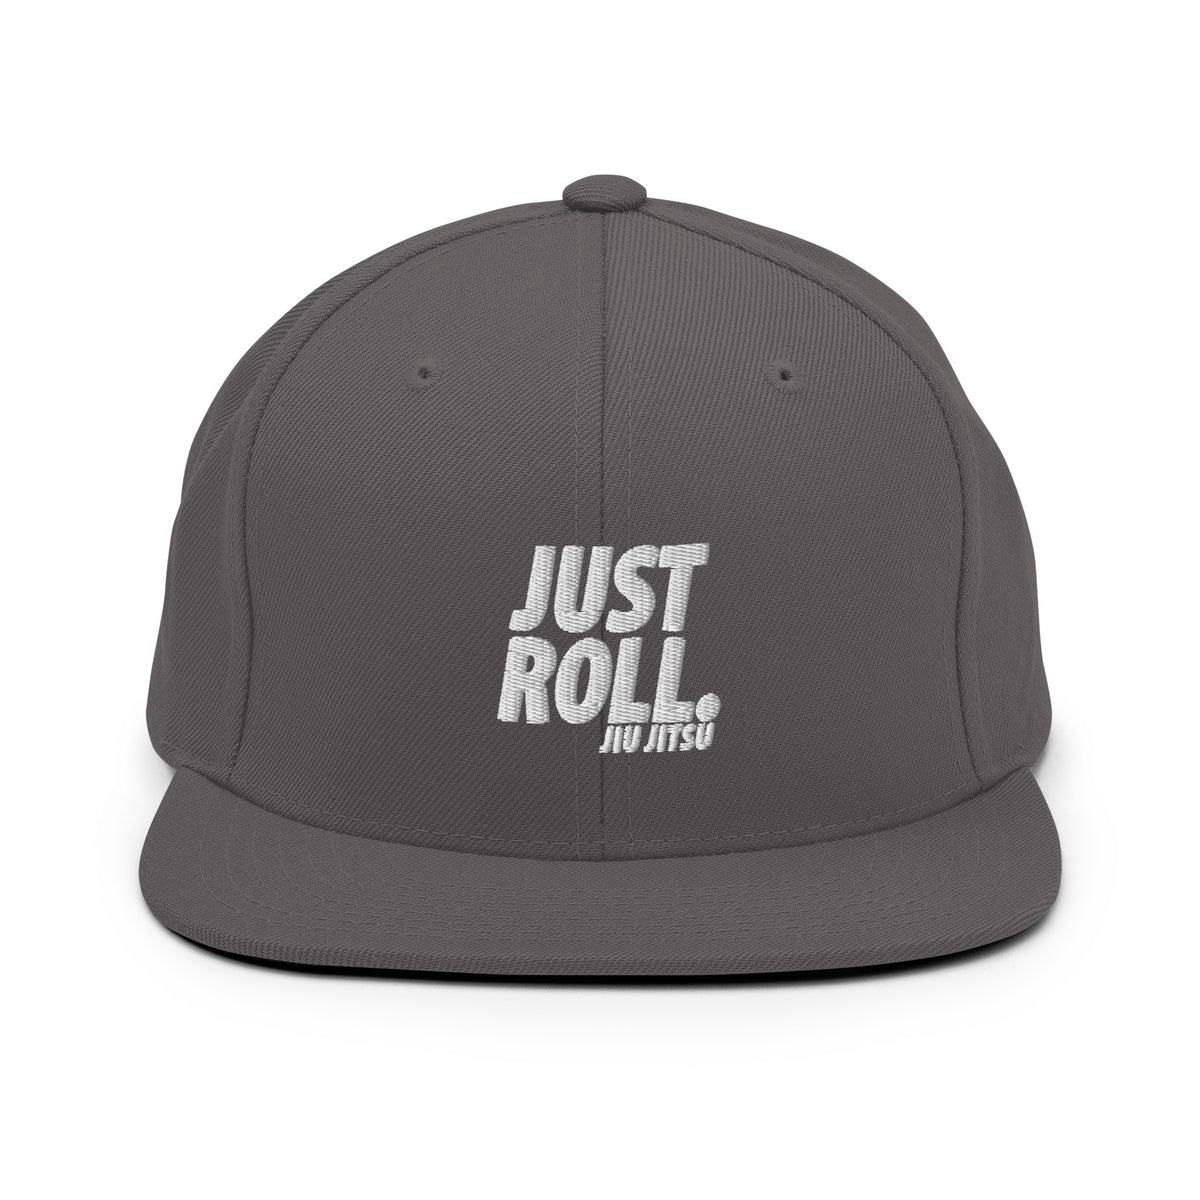 Just Rol Snapback Hat